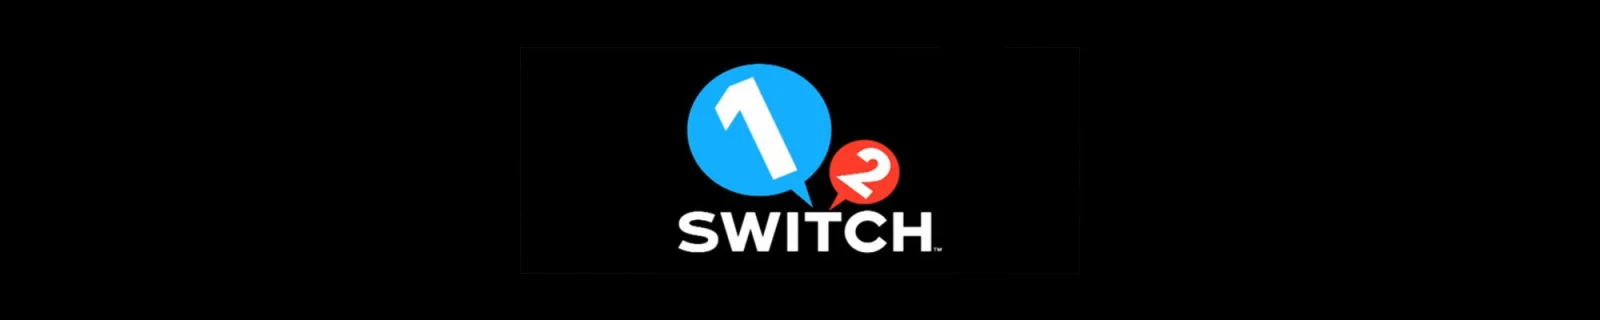 《1-2 Switch》将包含28款小游戏